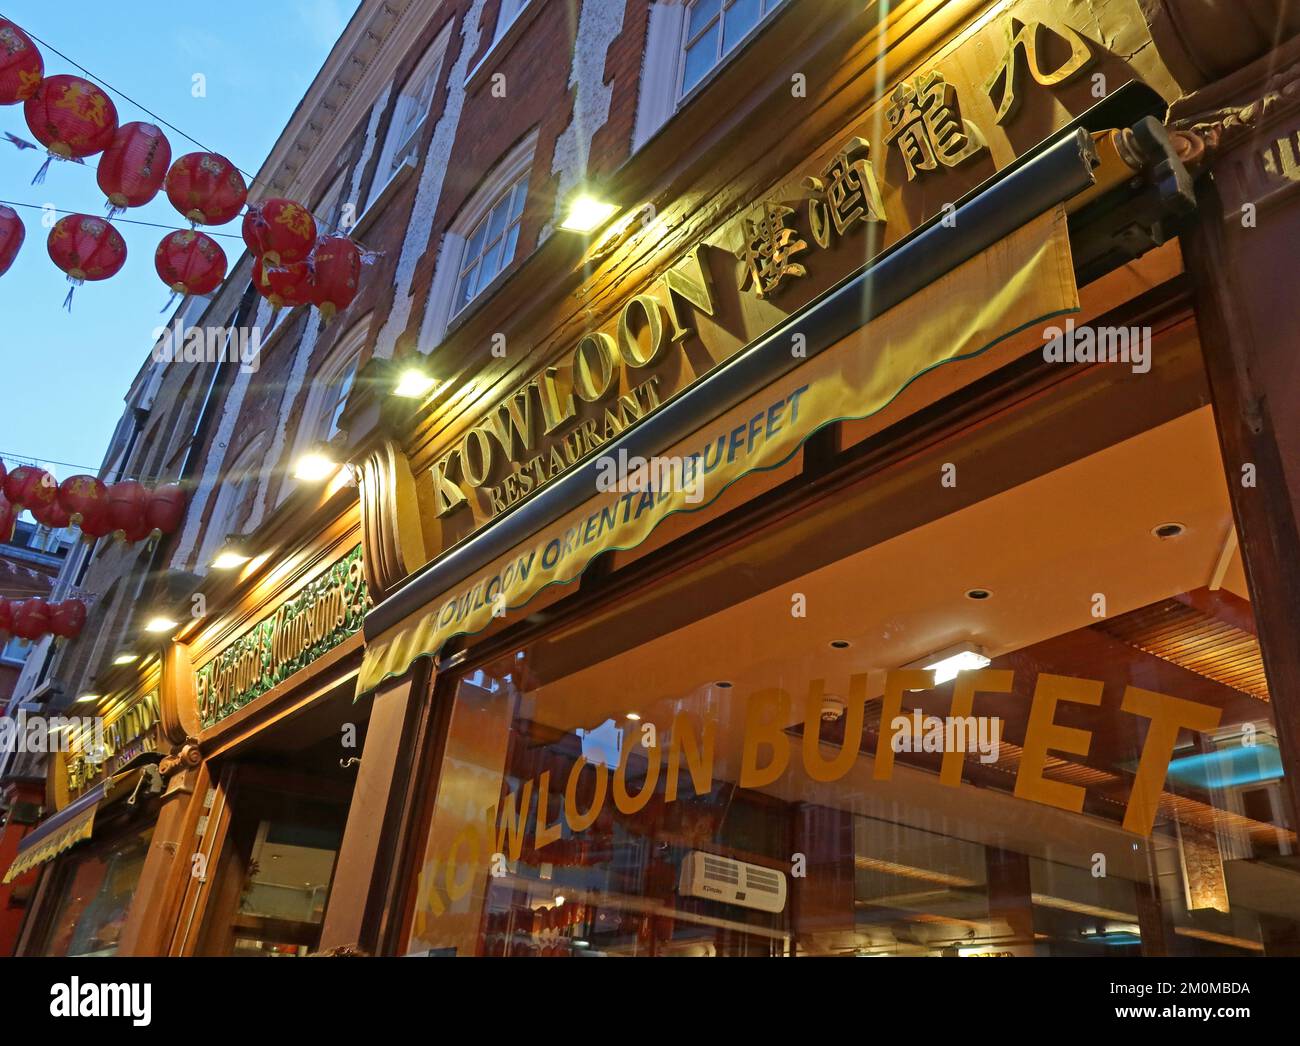 Kowloon Hong Kong buffet restaurant chinois, 21-22 Gerrard St, Chinatown, SOHO, Londres, Angleterre, Royaume-Uni, W1D 6JH au crépuscule Banque D'Images